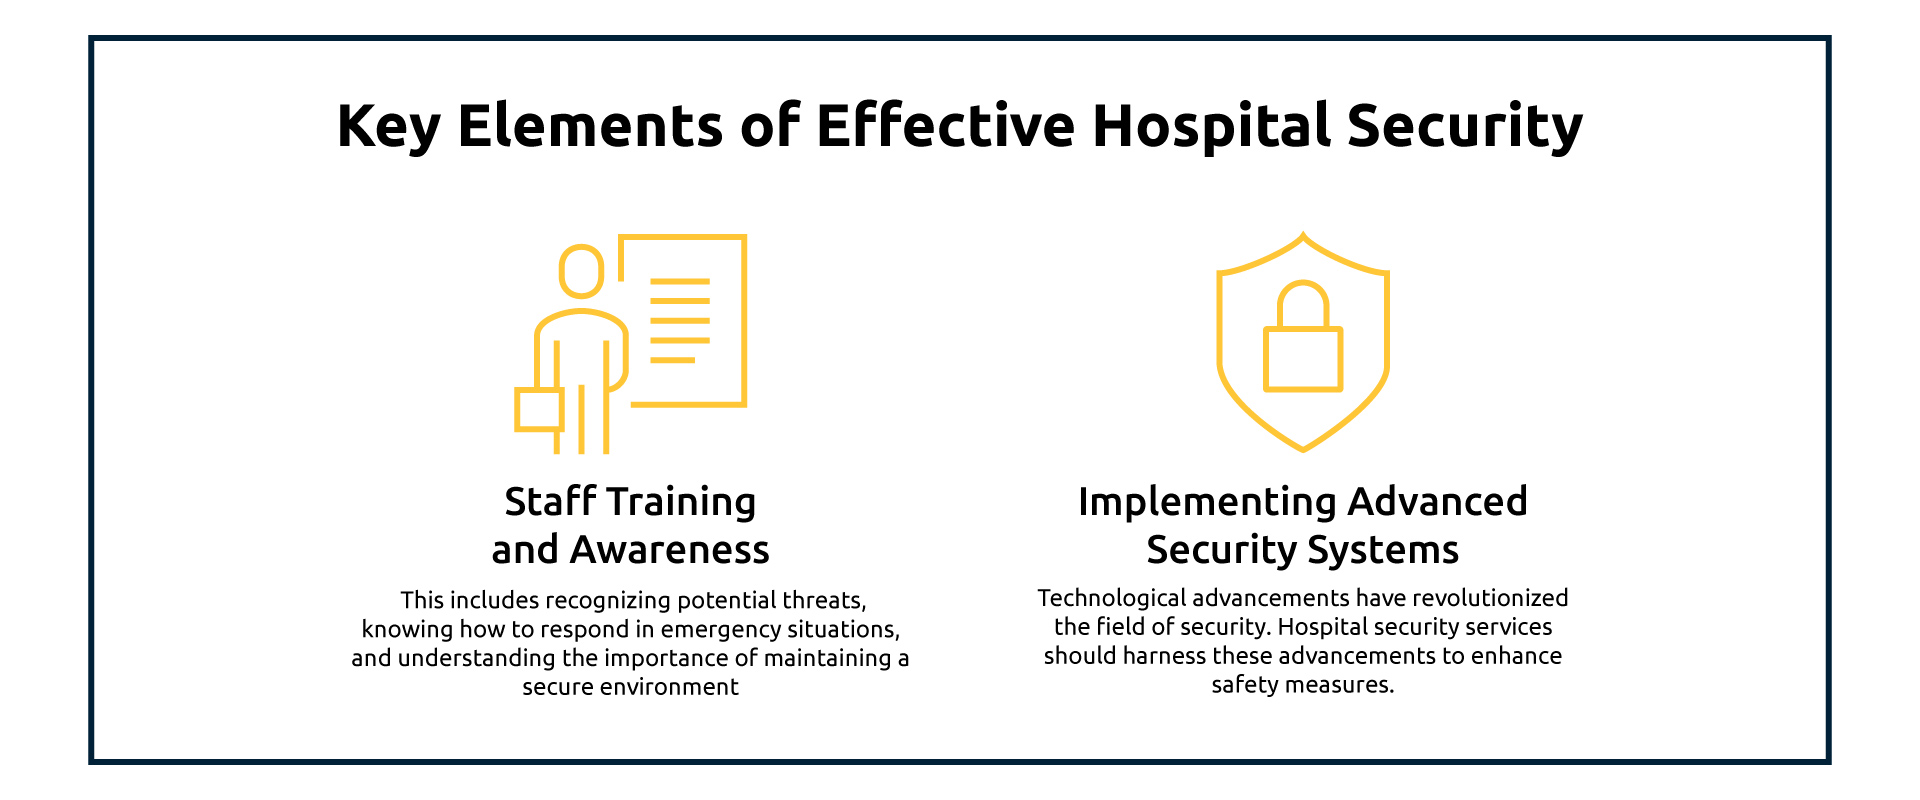 Key Elements of Effective Hospital Security